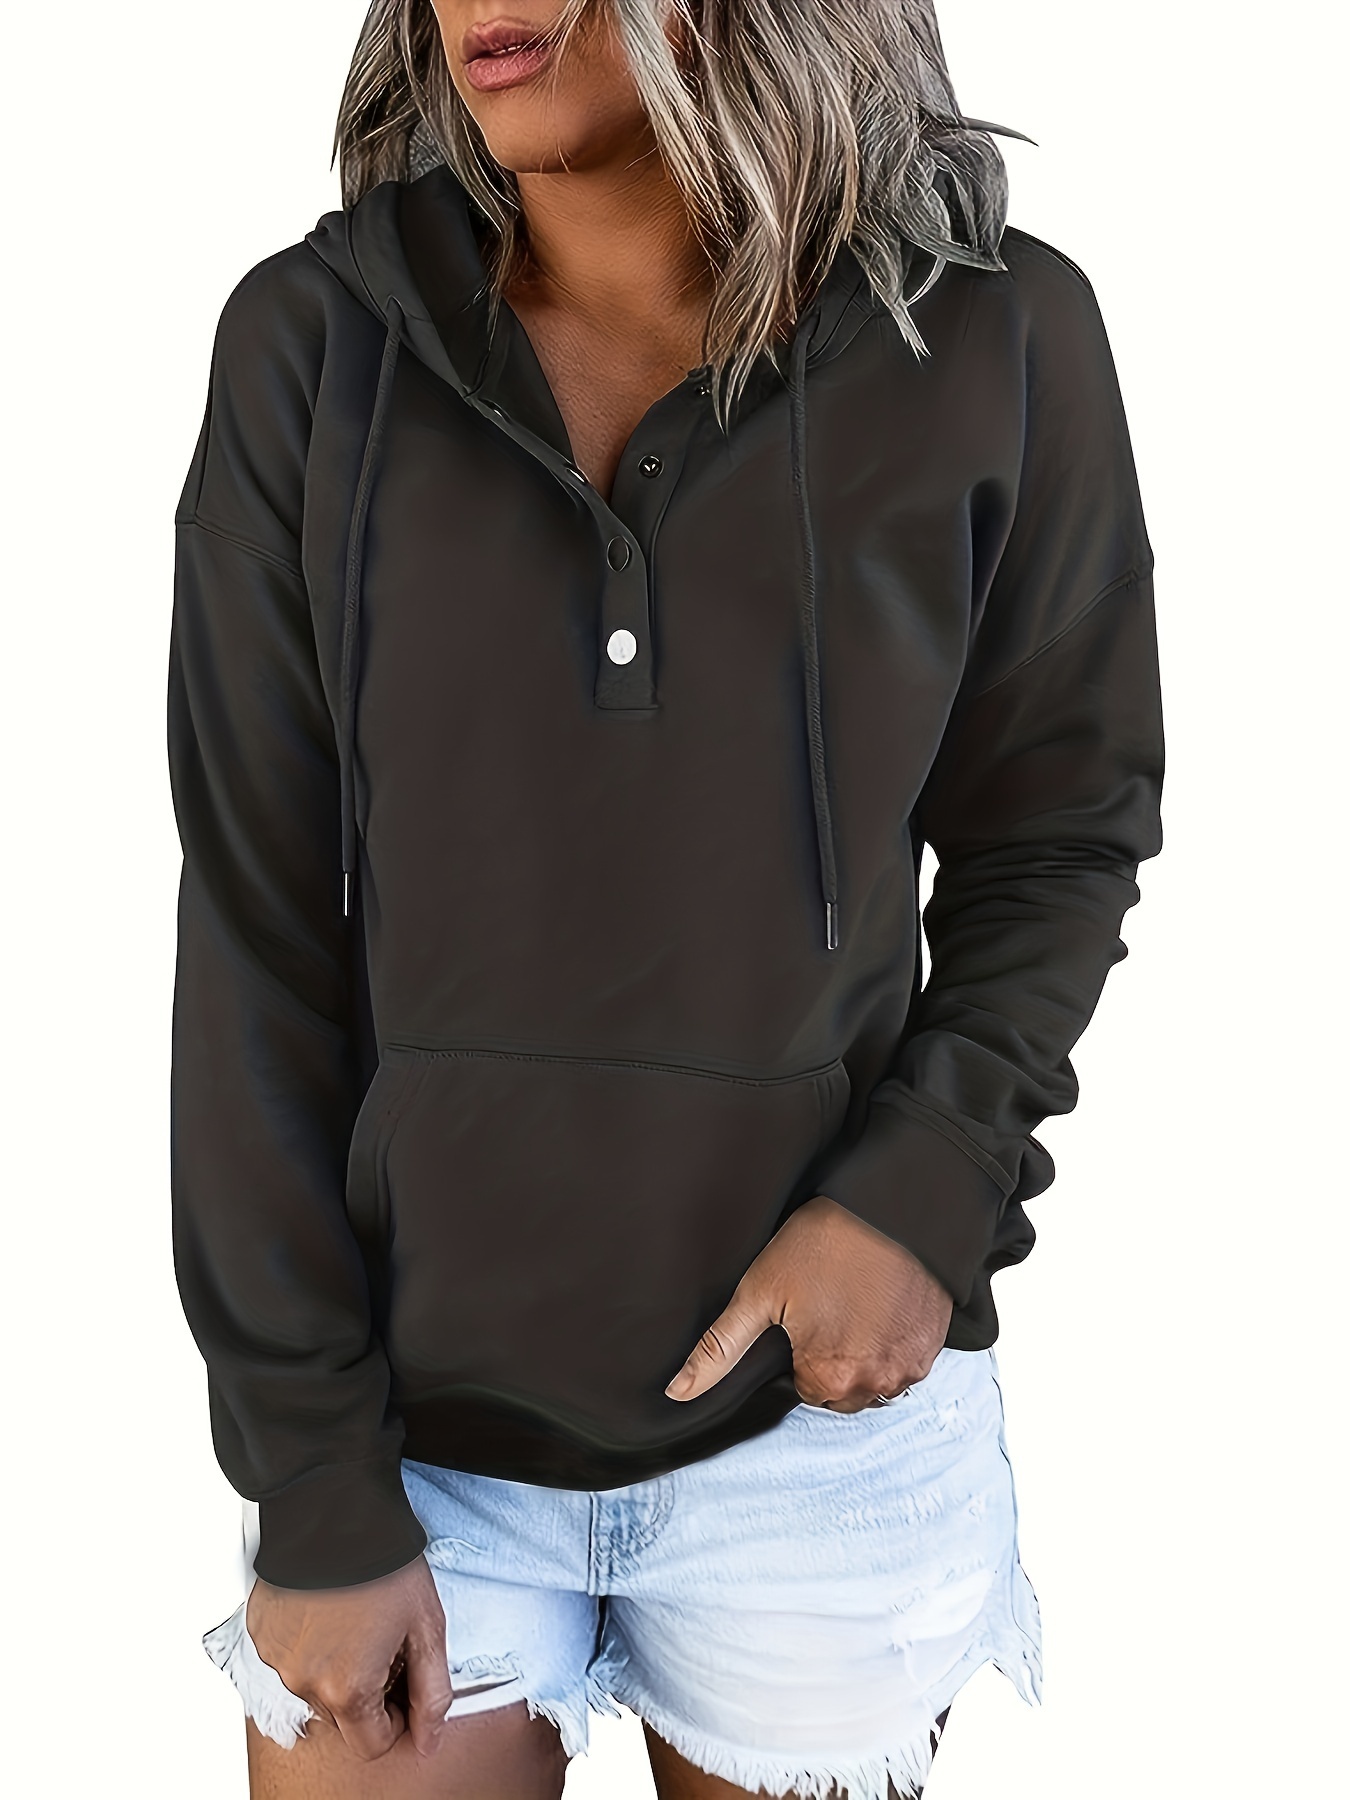 HAPIMO Rollbacks Sweatshirt for Women Button Pocket Drawstring